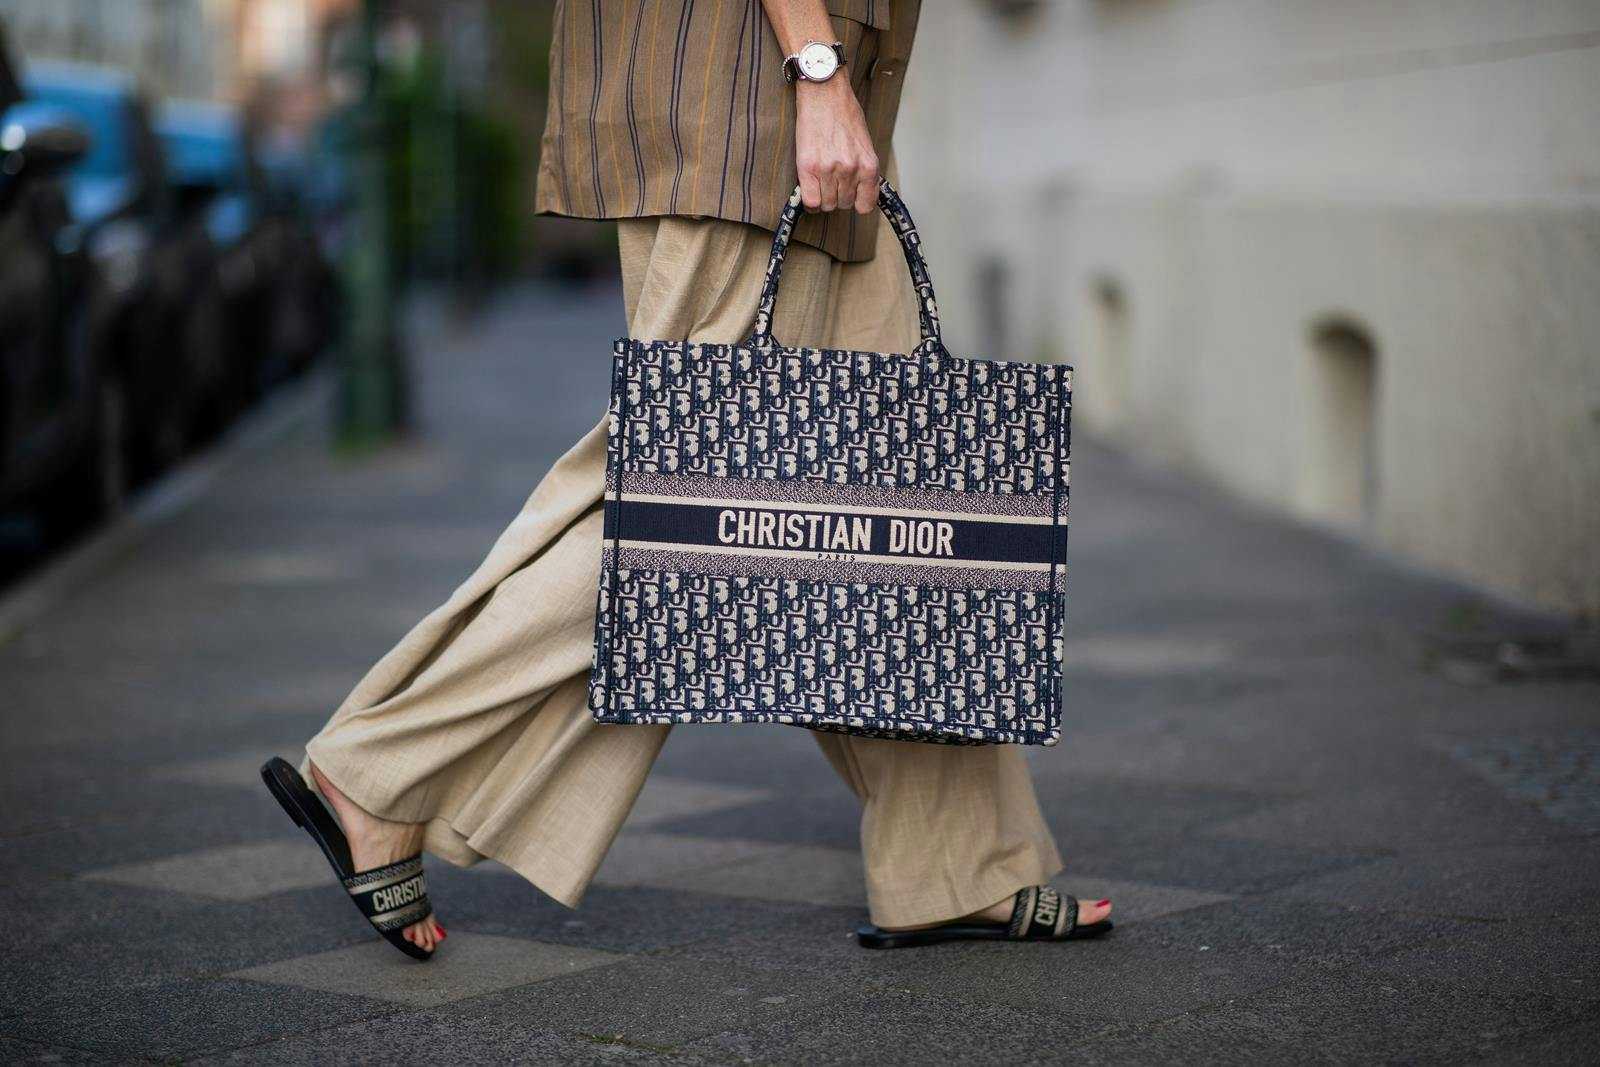  Christian Dior Tote Bag